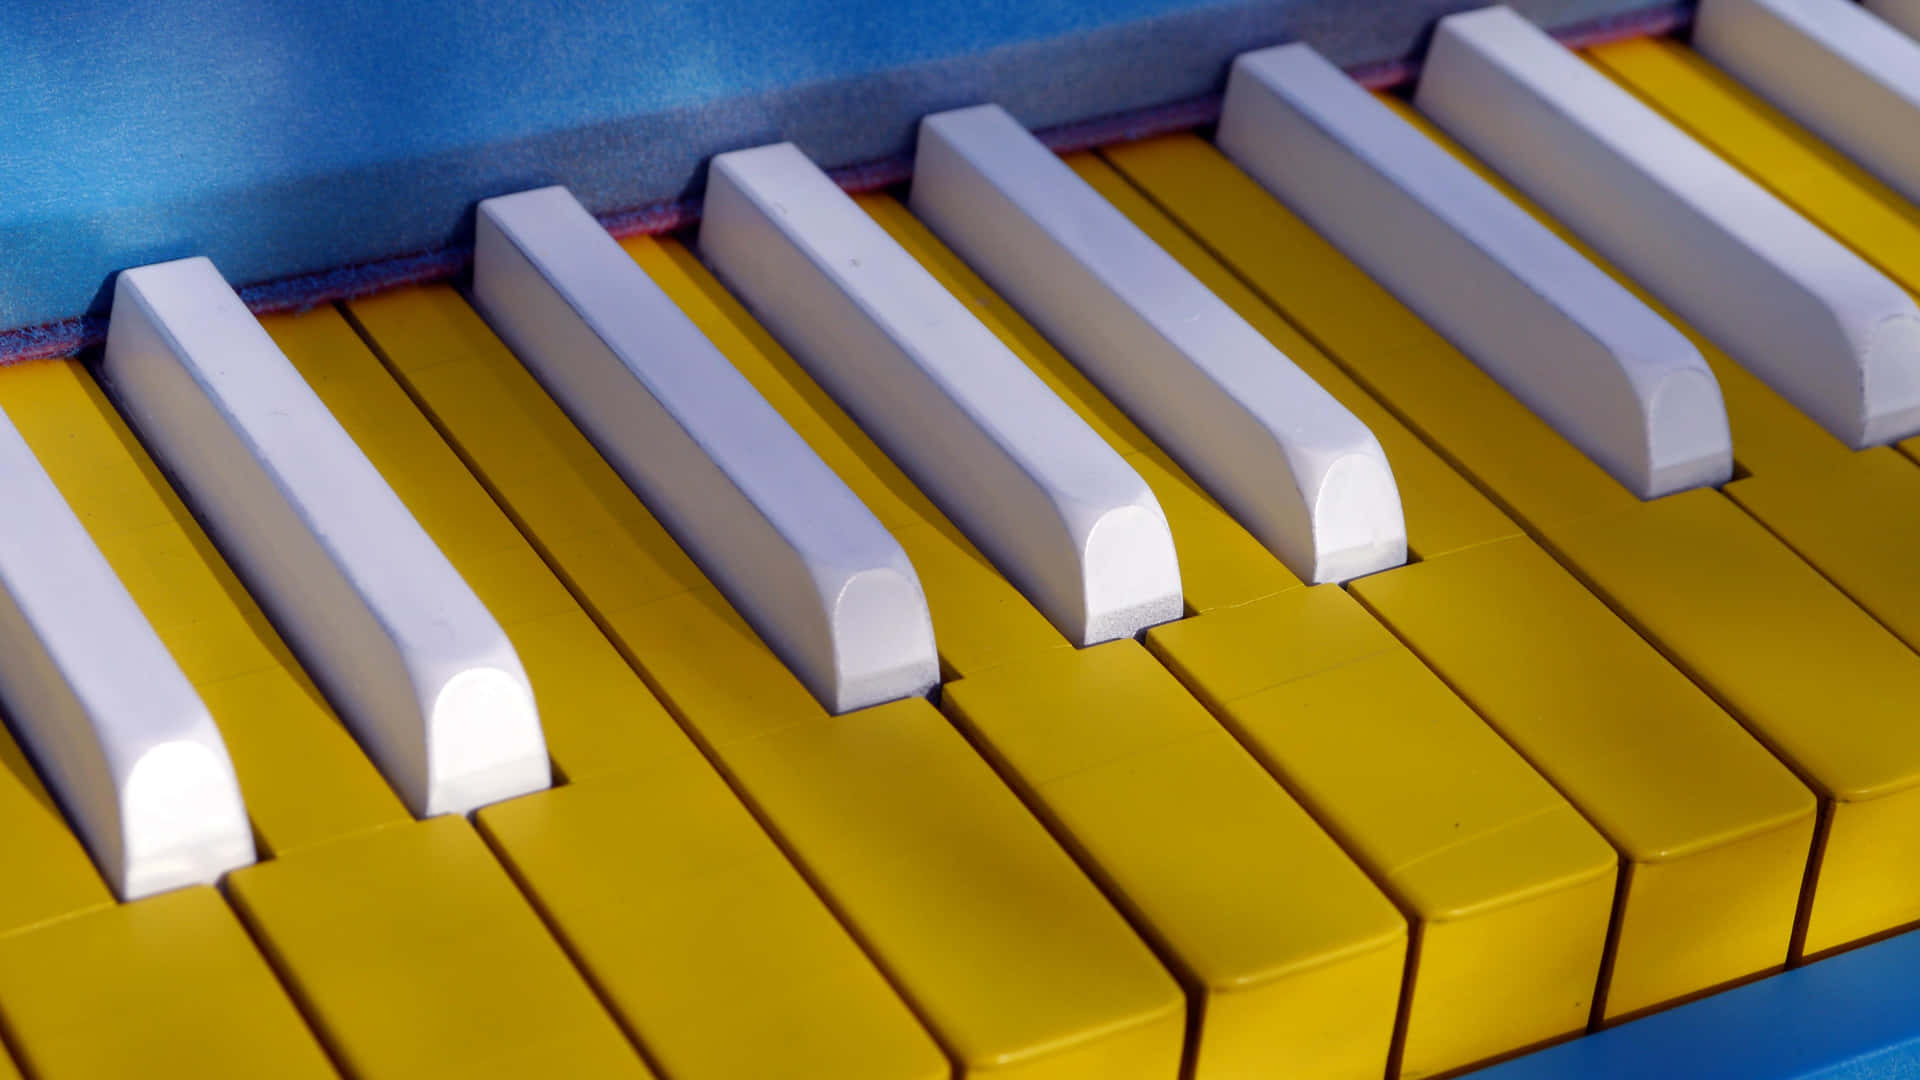 Piano keys creating soothing melodies